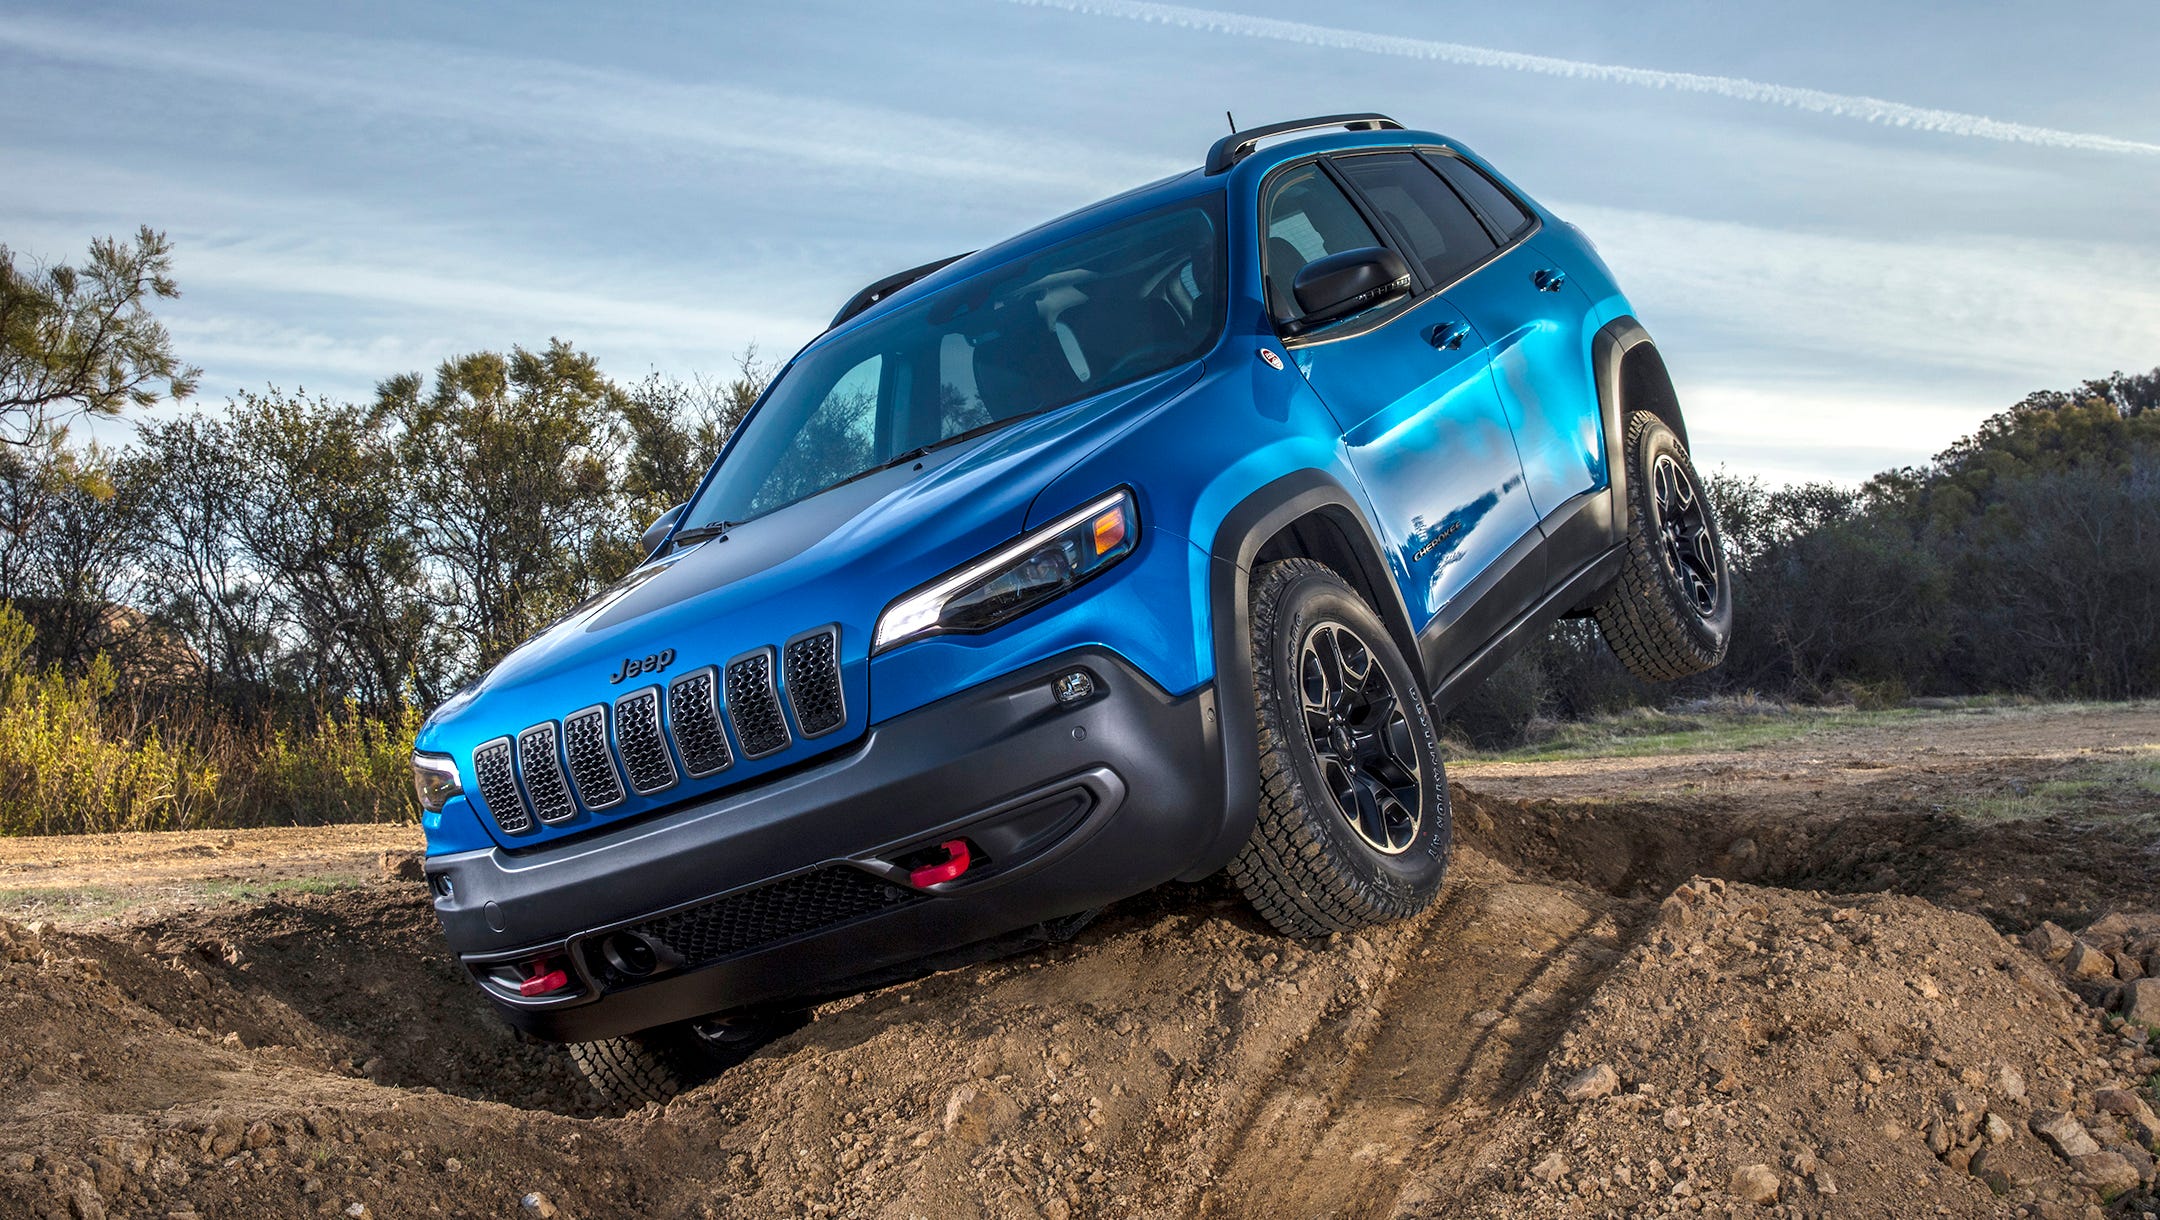 2019 Jeep Cherokee powers ahead with new engine, looks